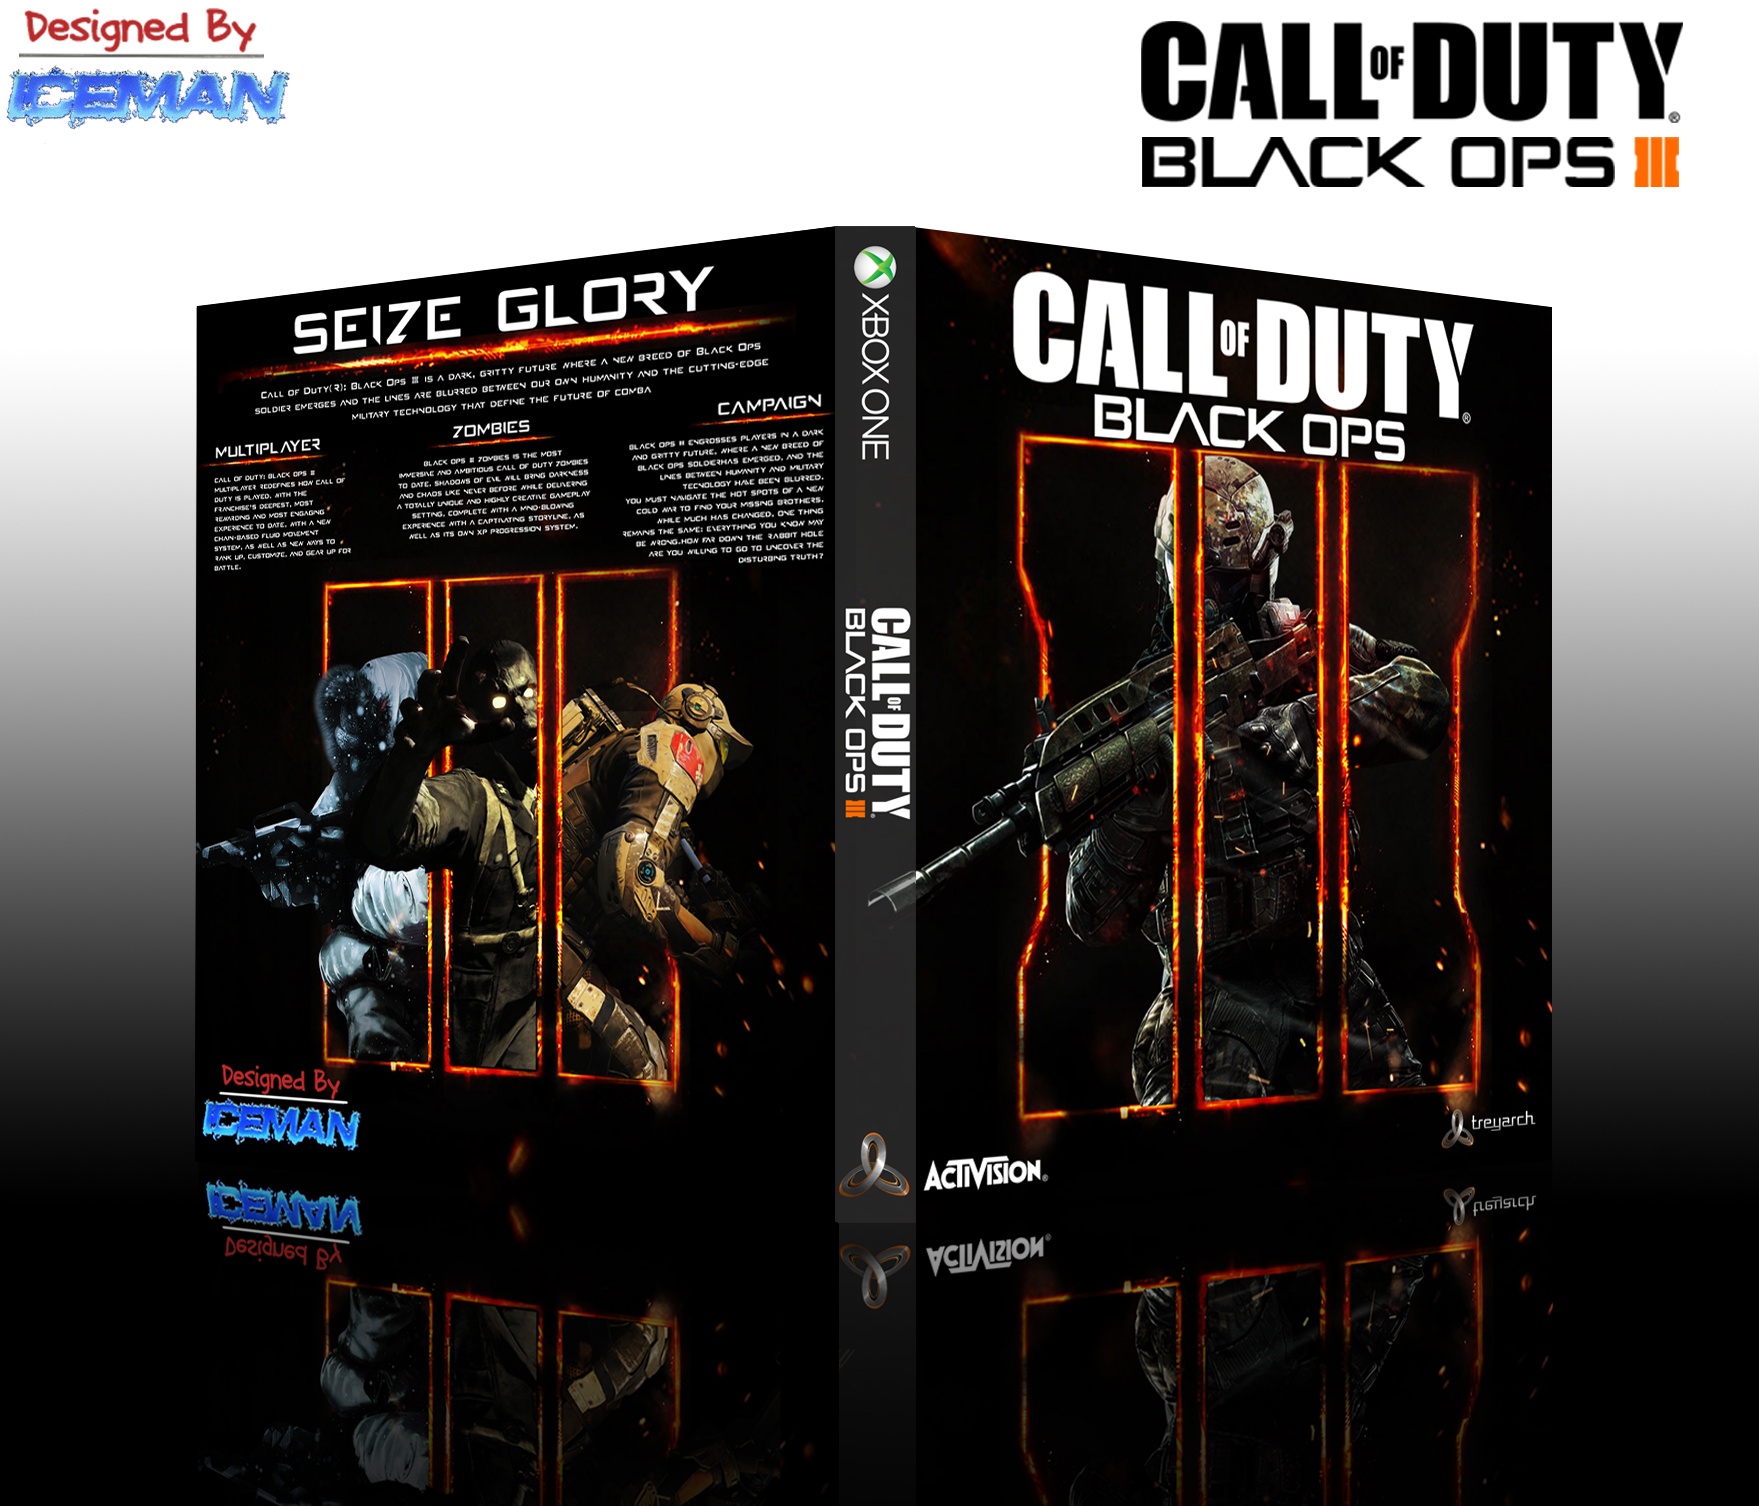 Call of Duty Black Ops III box cover